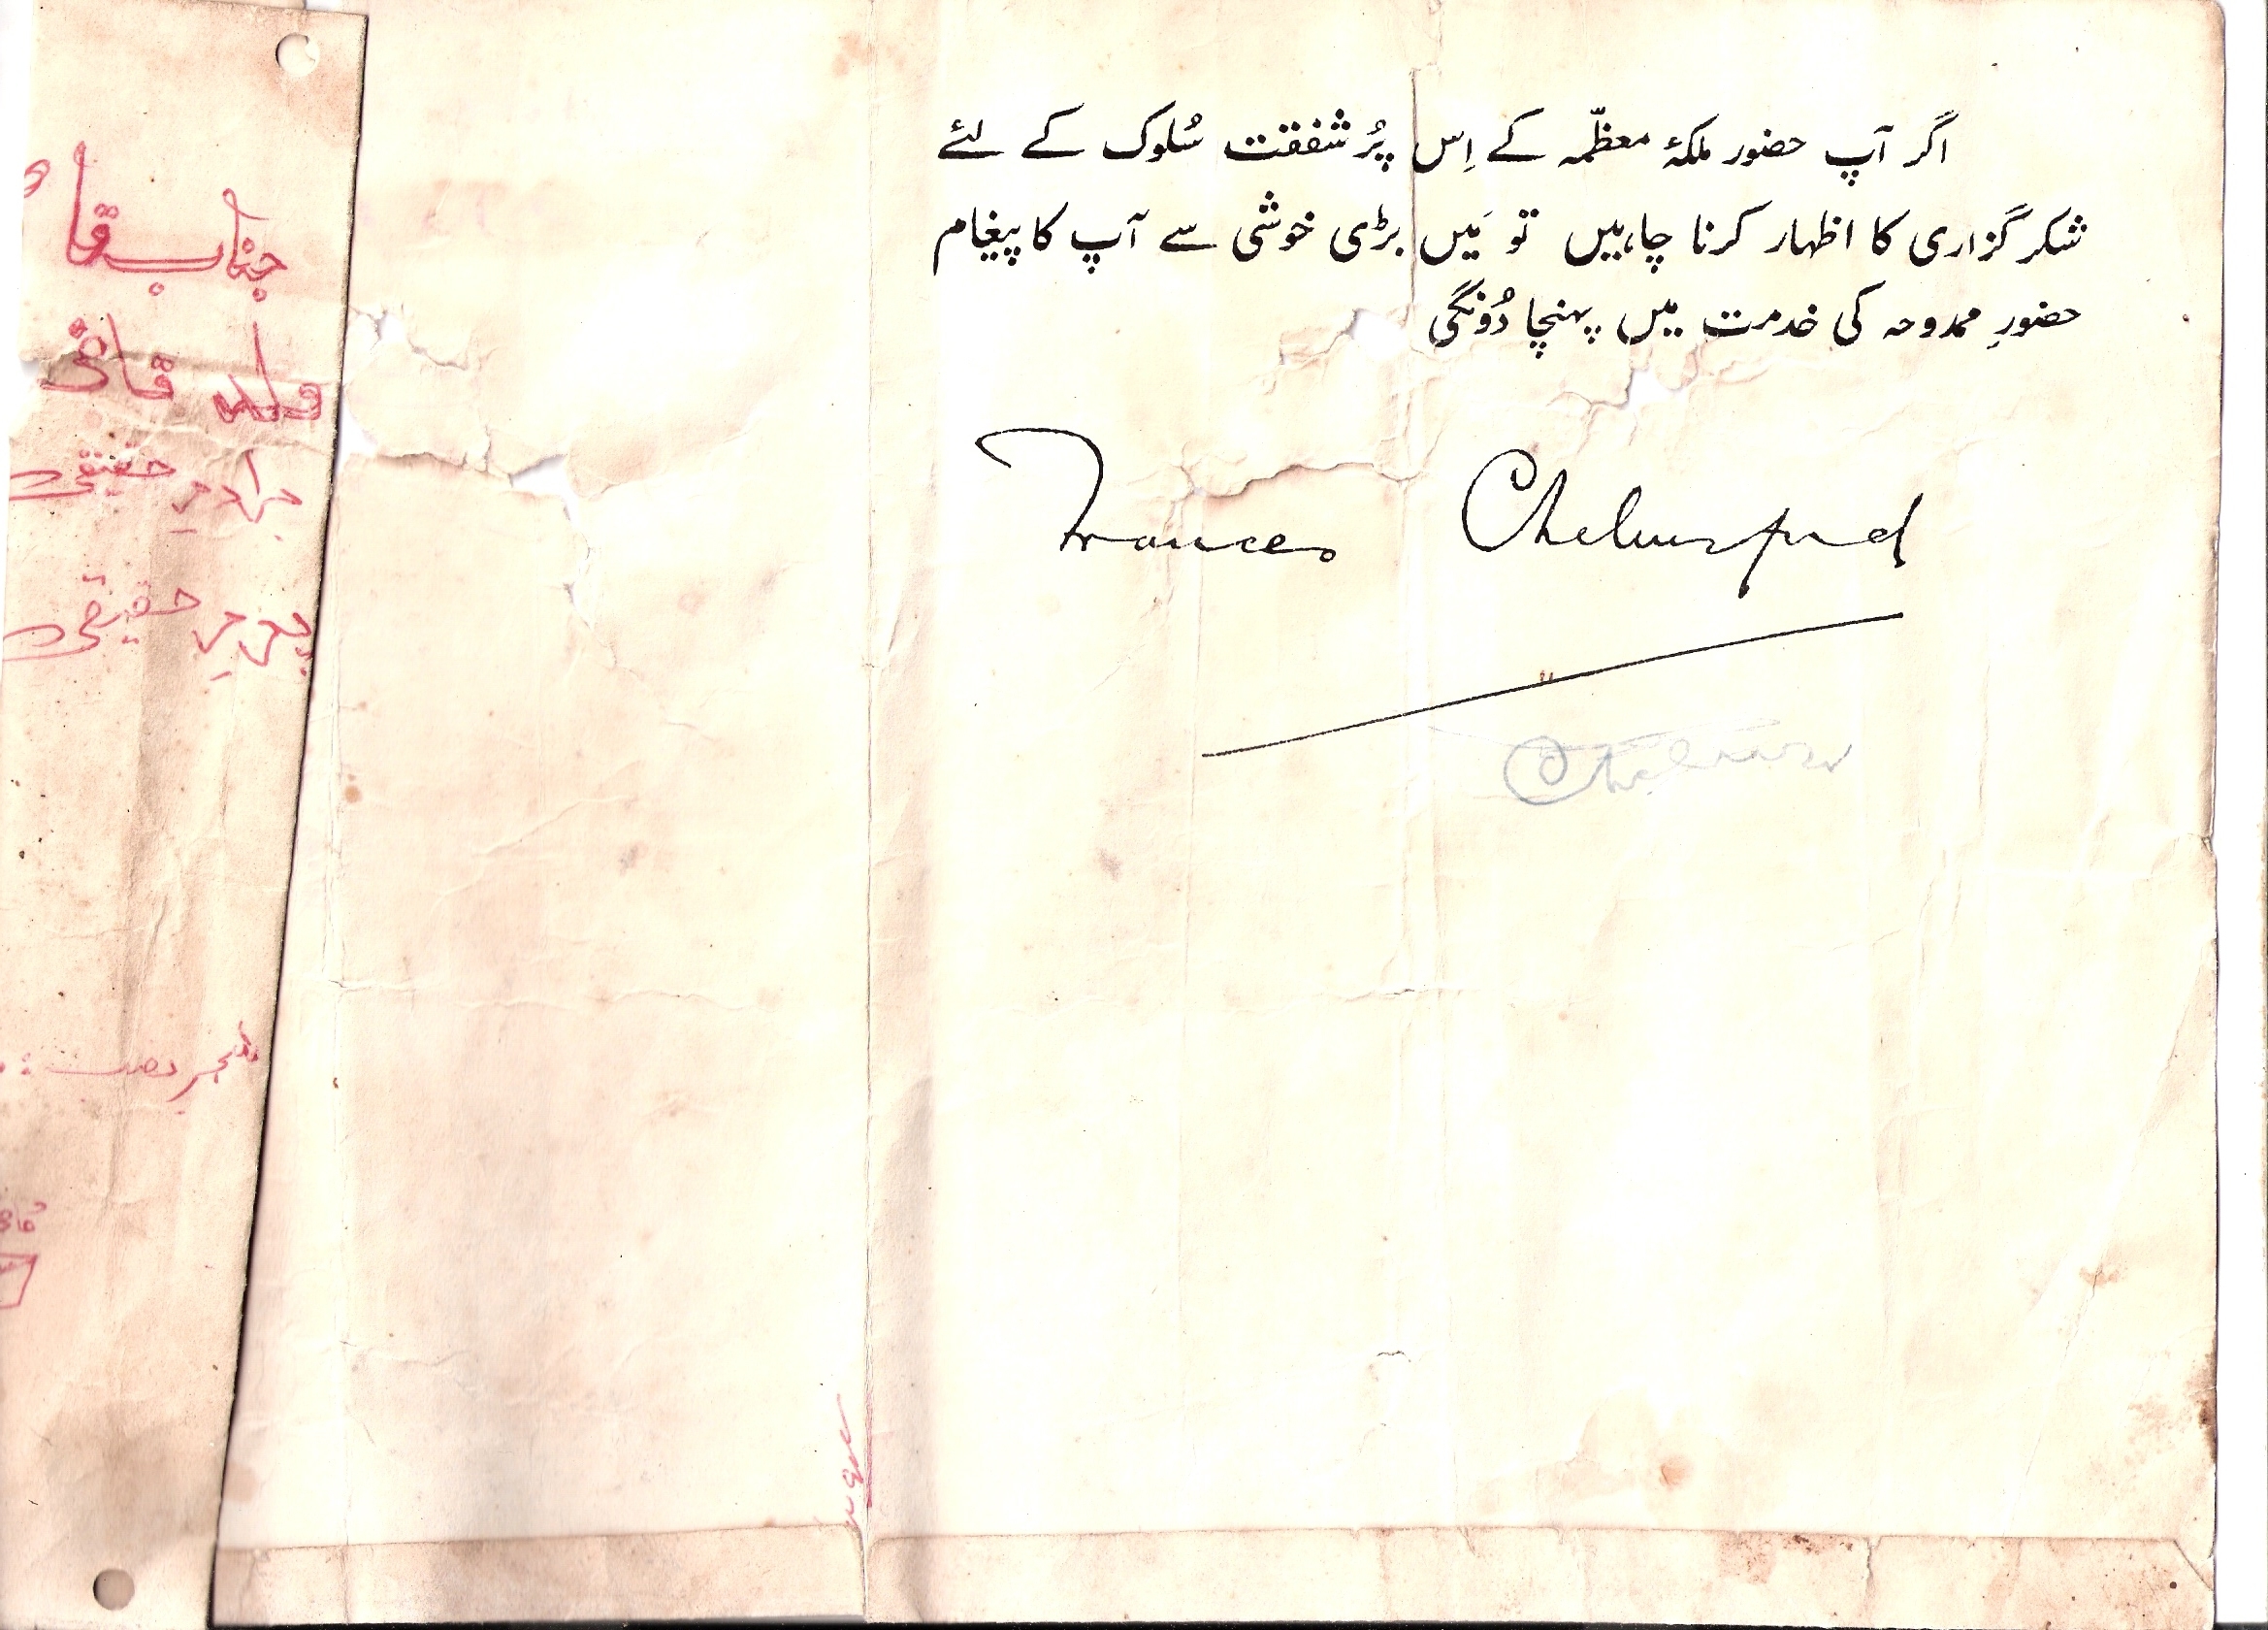 Ghulam Rabani document